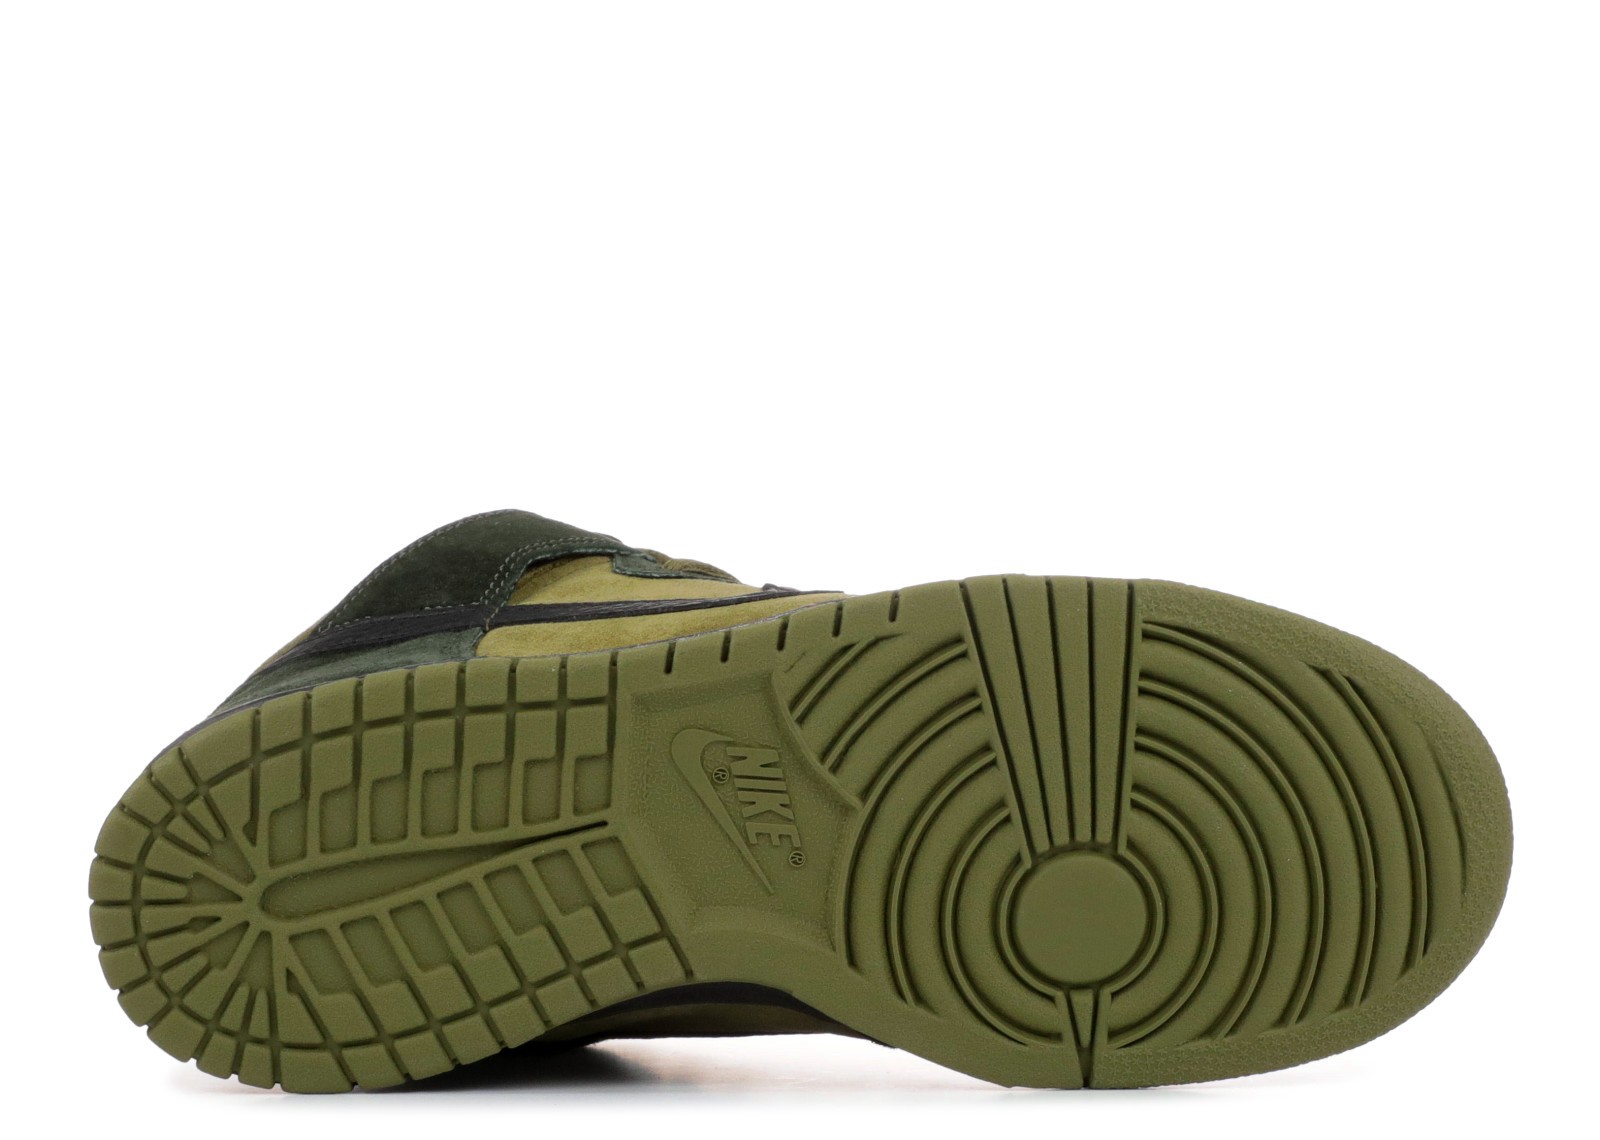 Nike Air Force 1 Low Camper Green/Gum Med Brown 